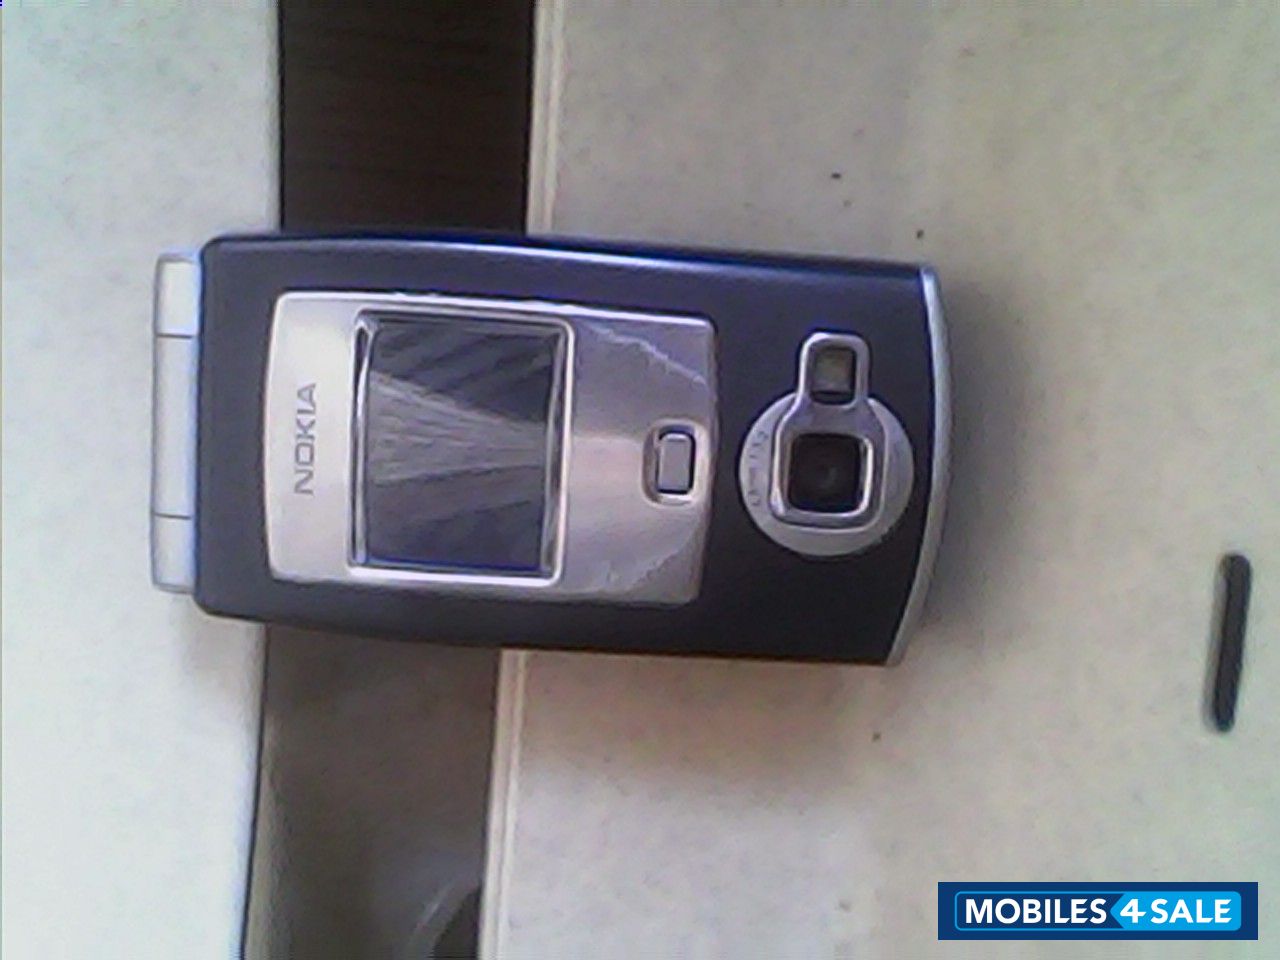 Silver Black Nokia N71